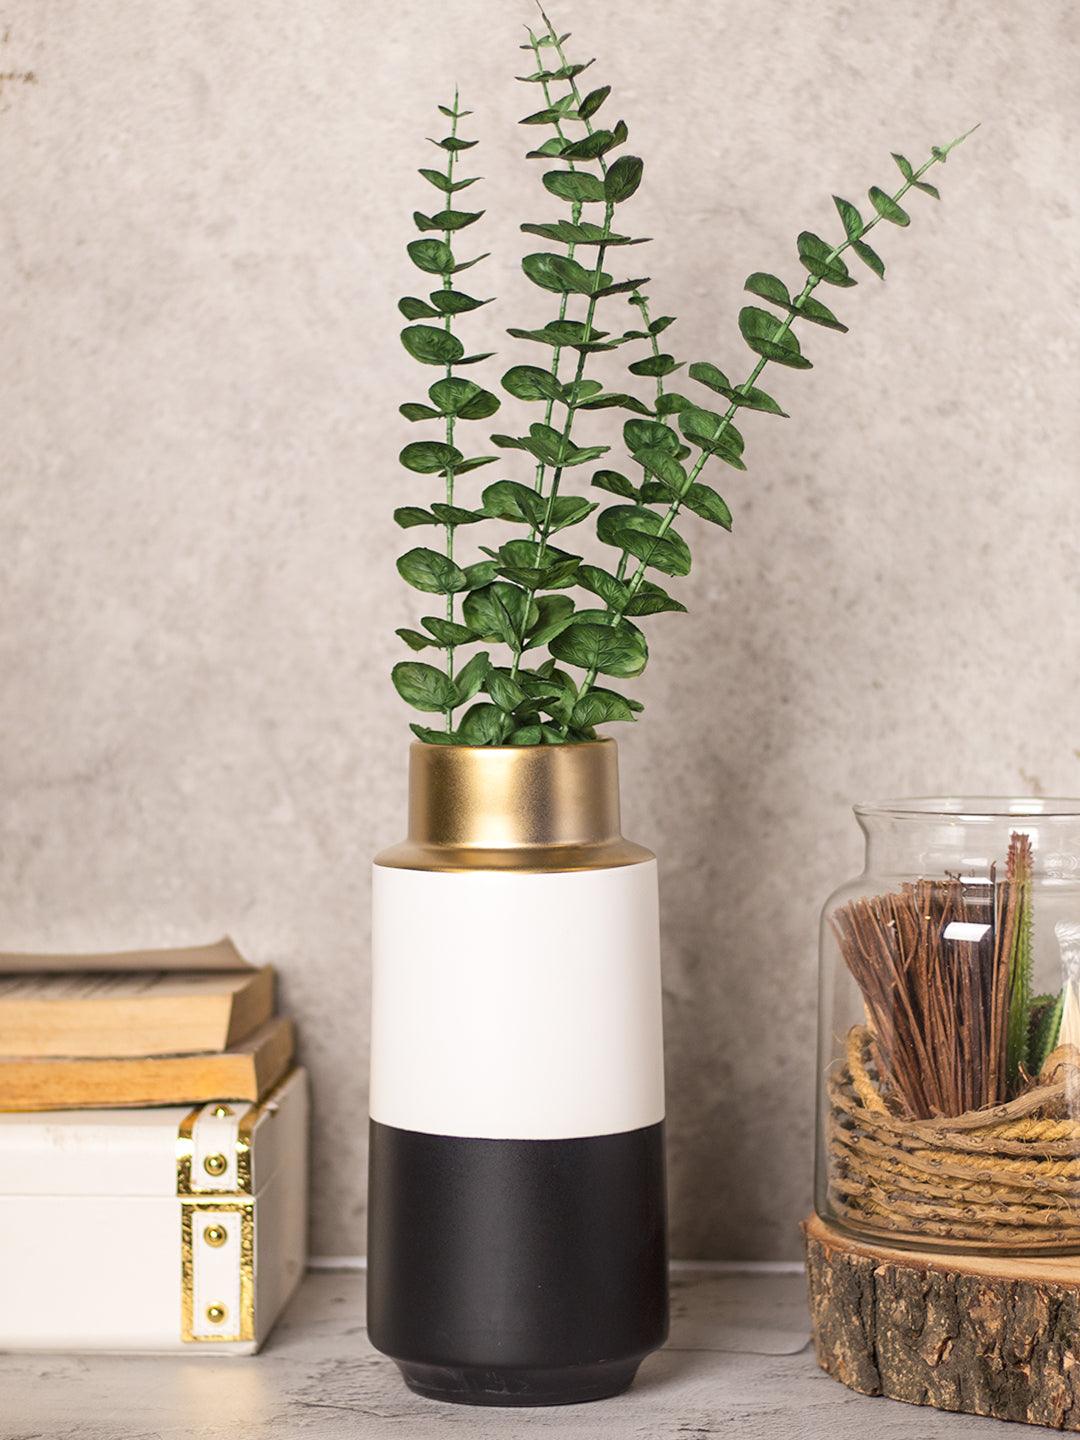 Stylish Ceramic Vase - Golden, White & Black, Contemporary Design - 1